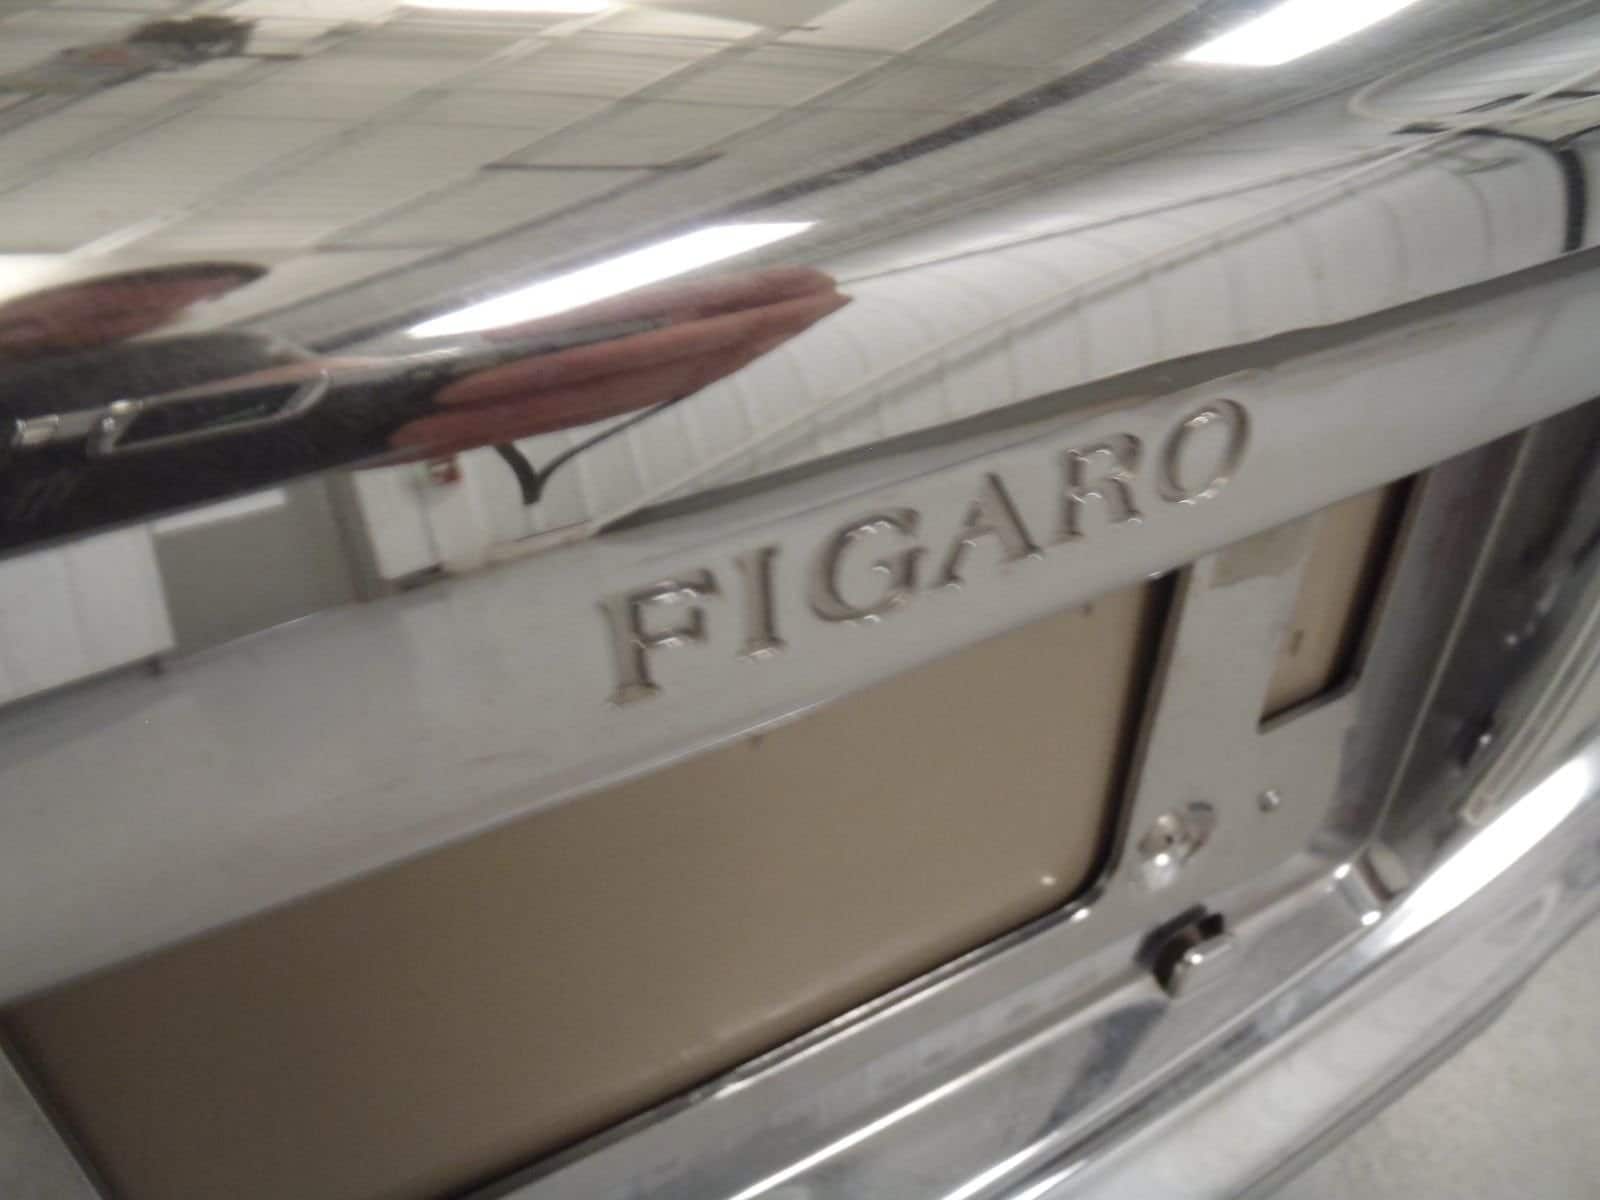 1991 Nissan Figaro 41